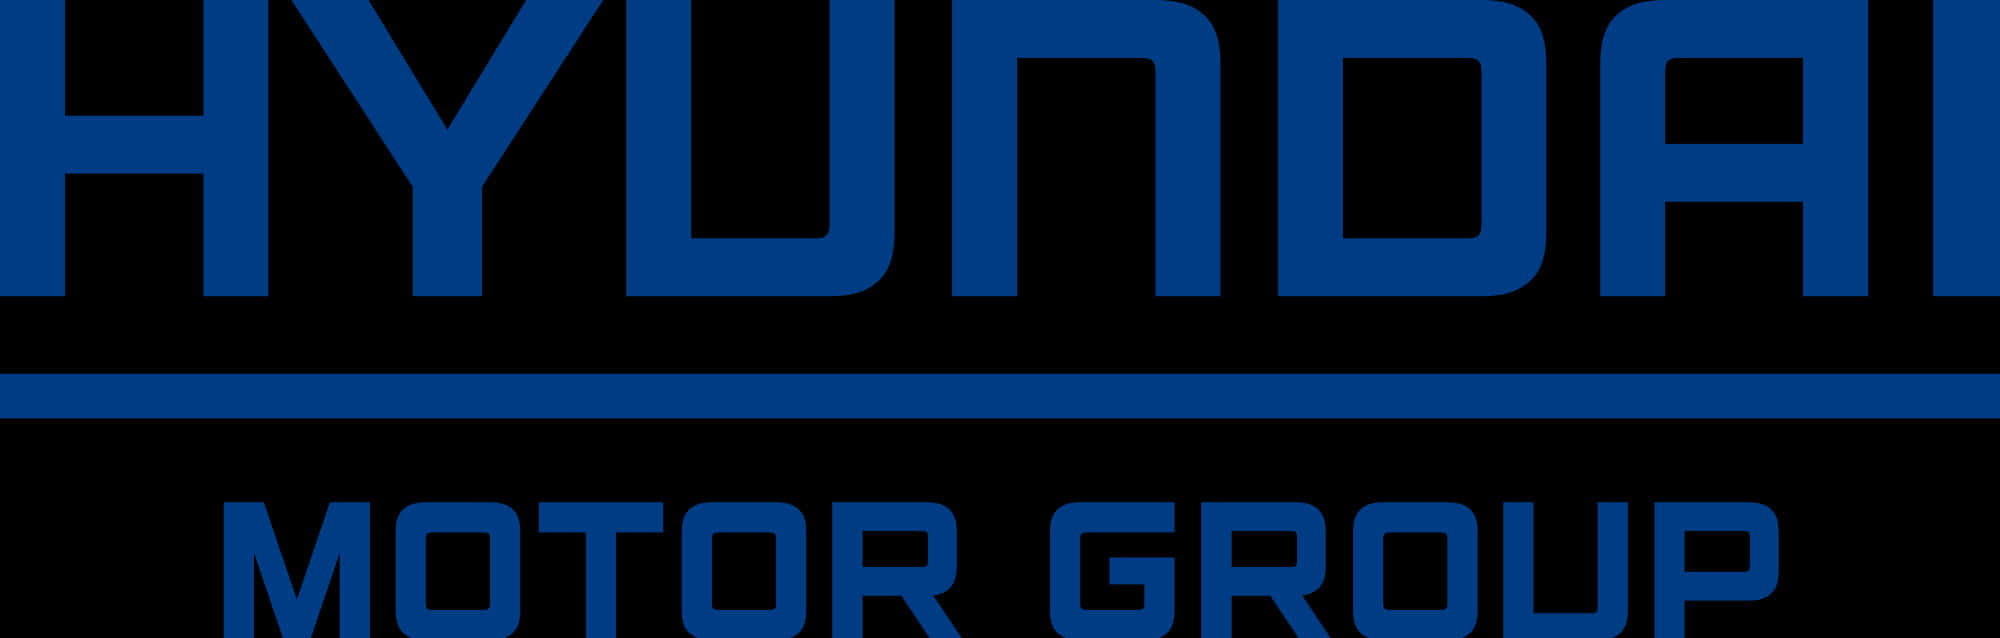 Hyundai Motor Group Logo PNG